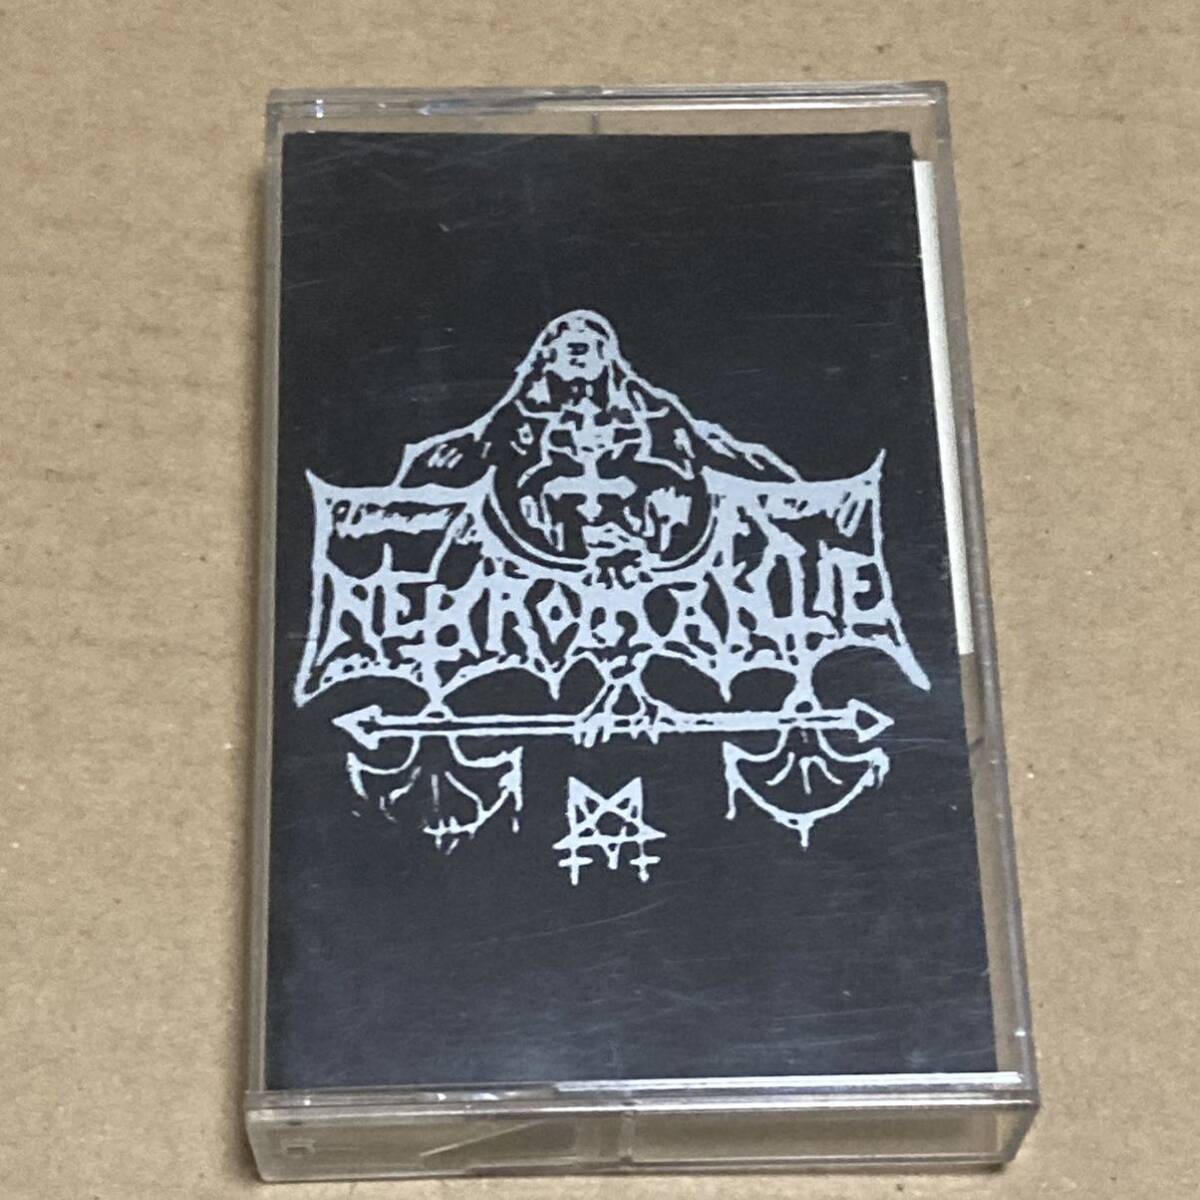  Colombia metal Nekromantie кассета black death thrash metal sepultura sarcofago